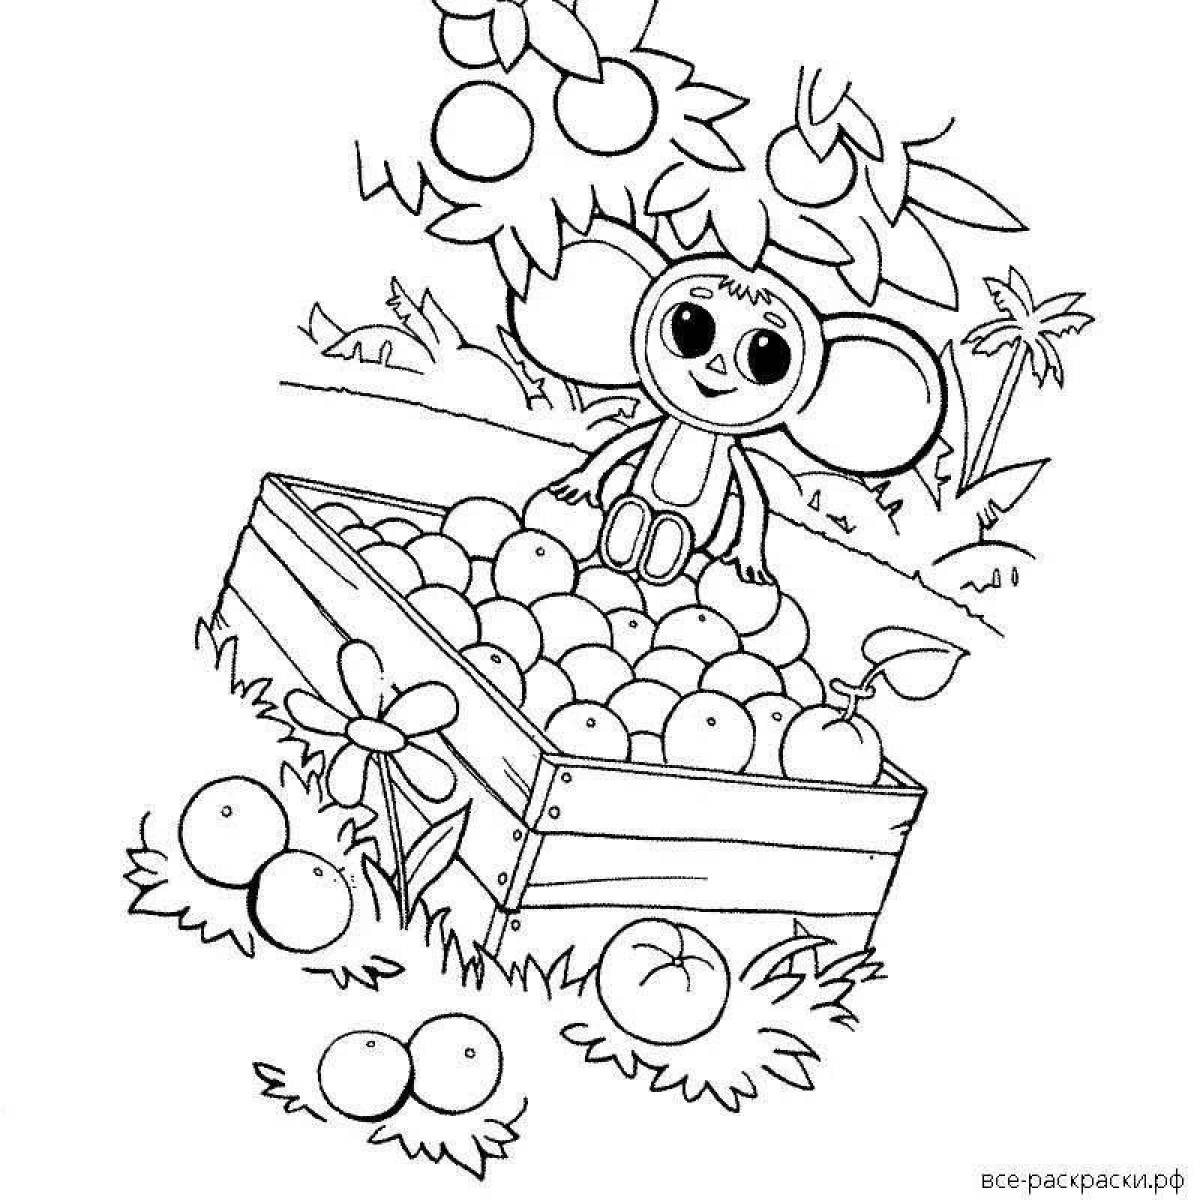 Wonderful Cheburashka coloring book